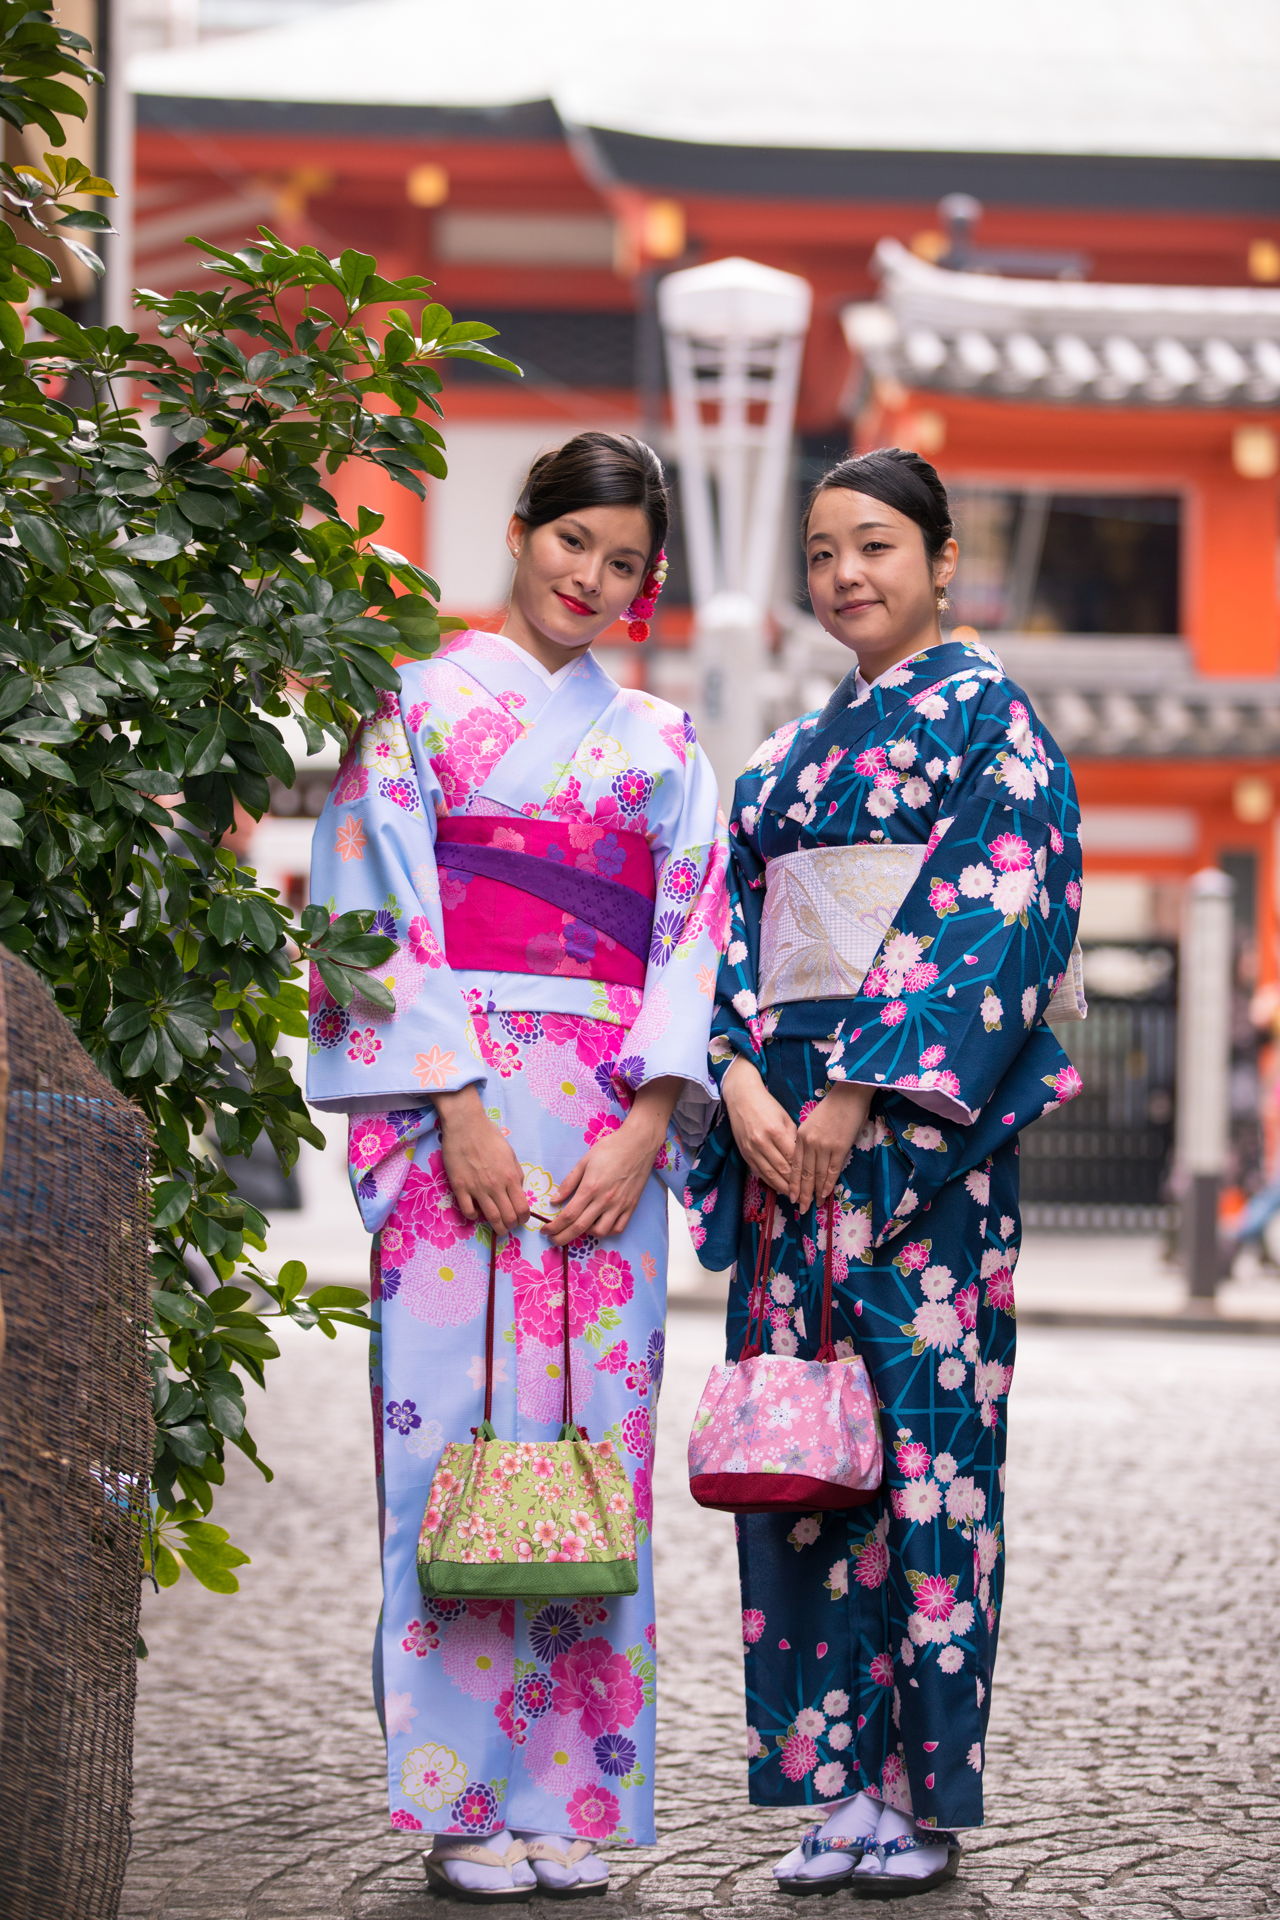 japanese tourist costume